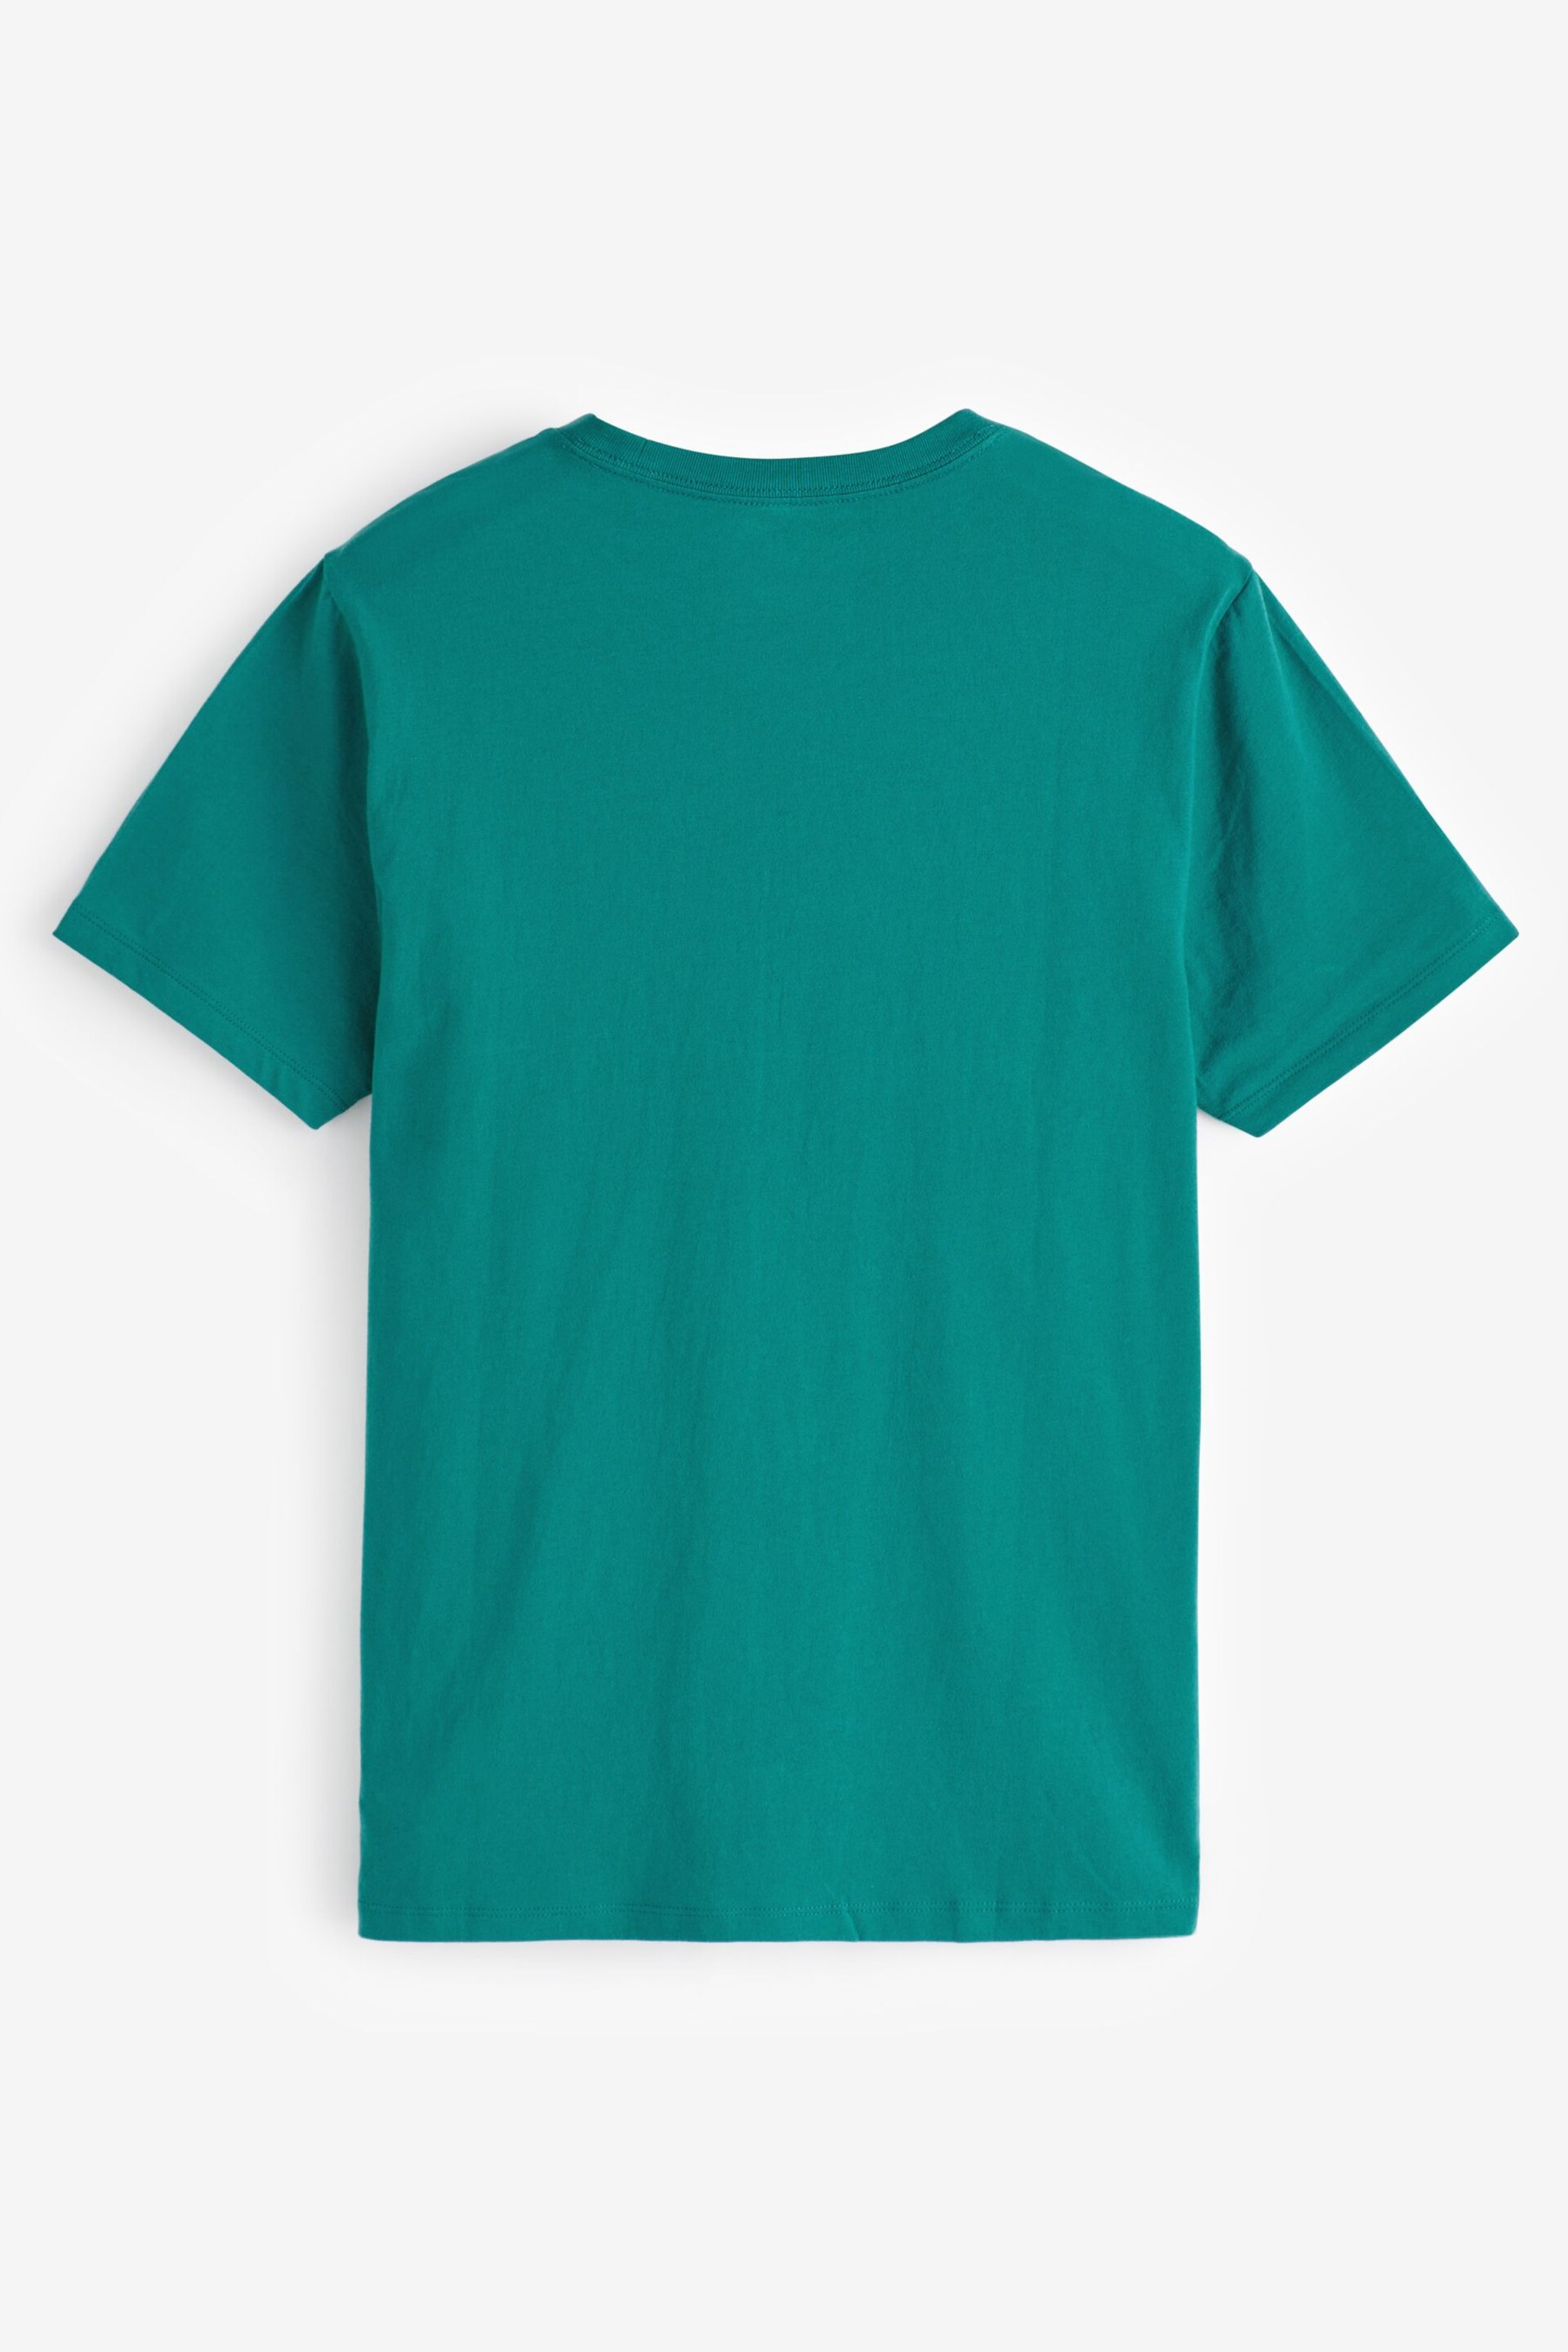 Gap Green Everyday Soft Logo Short Sleeve Crew Neck T-Shirt - Image 3 of 4